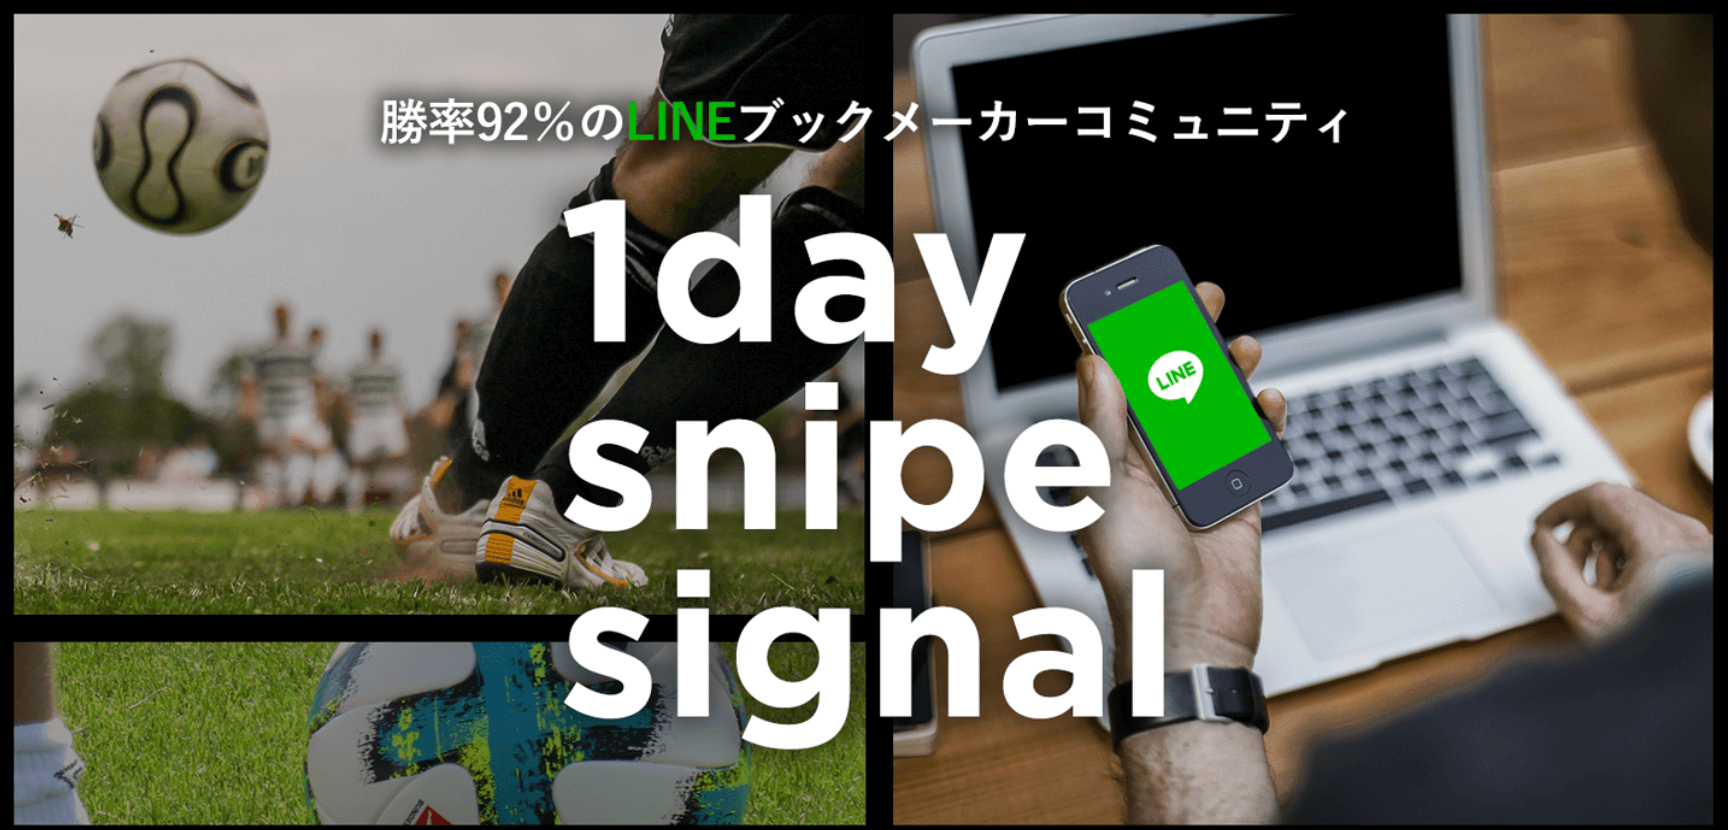 LINEブックメーカー1day snipe signal豪華特典付き評判口コミレビュー